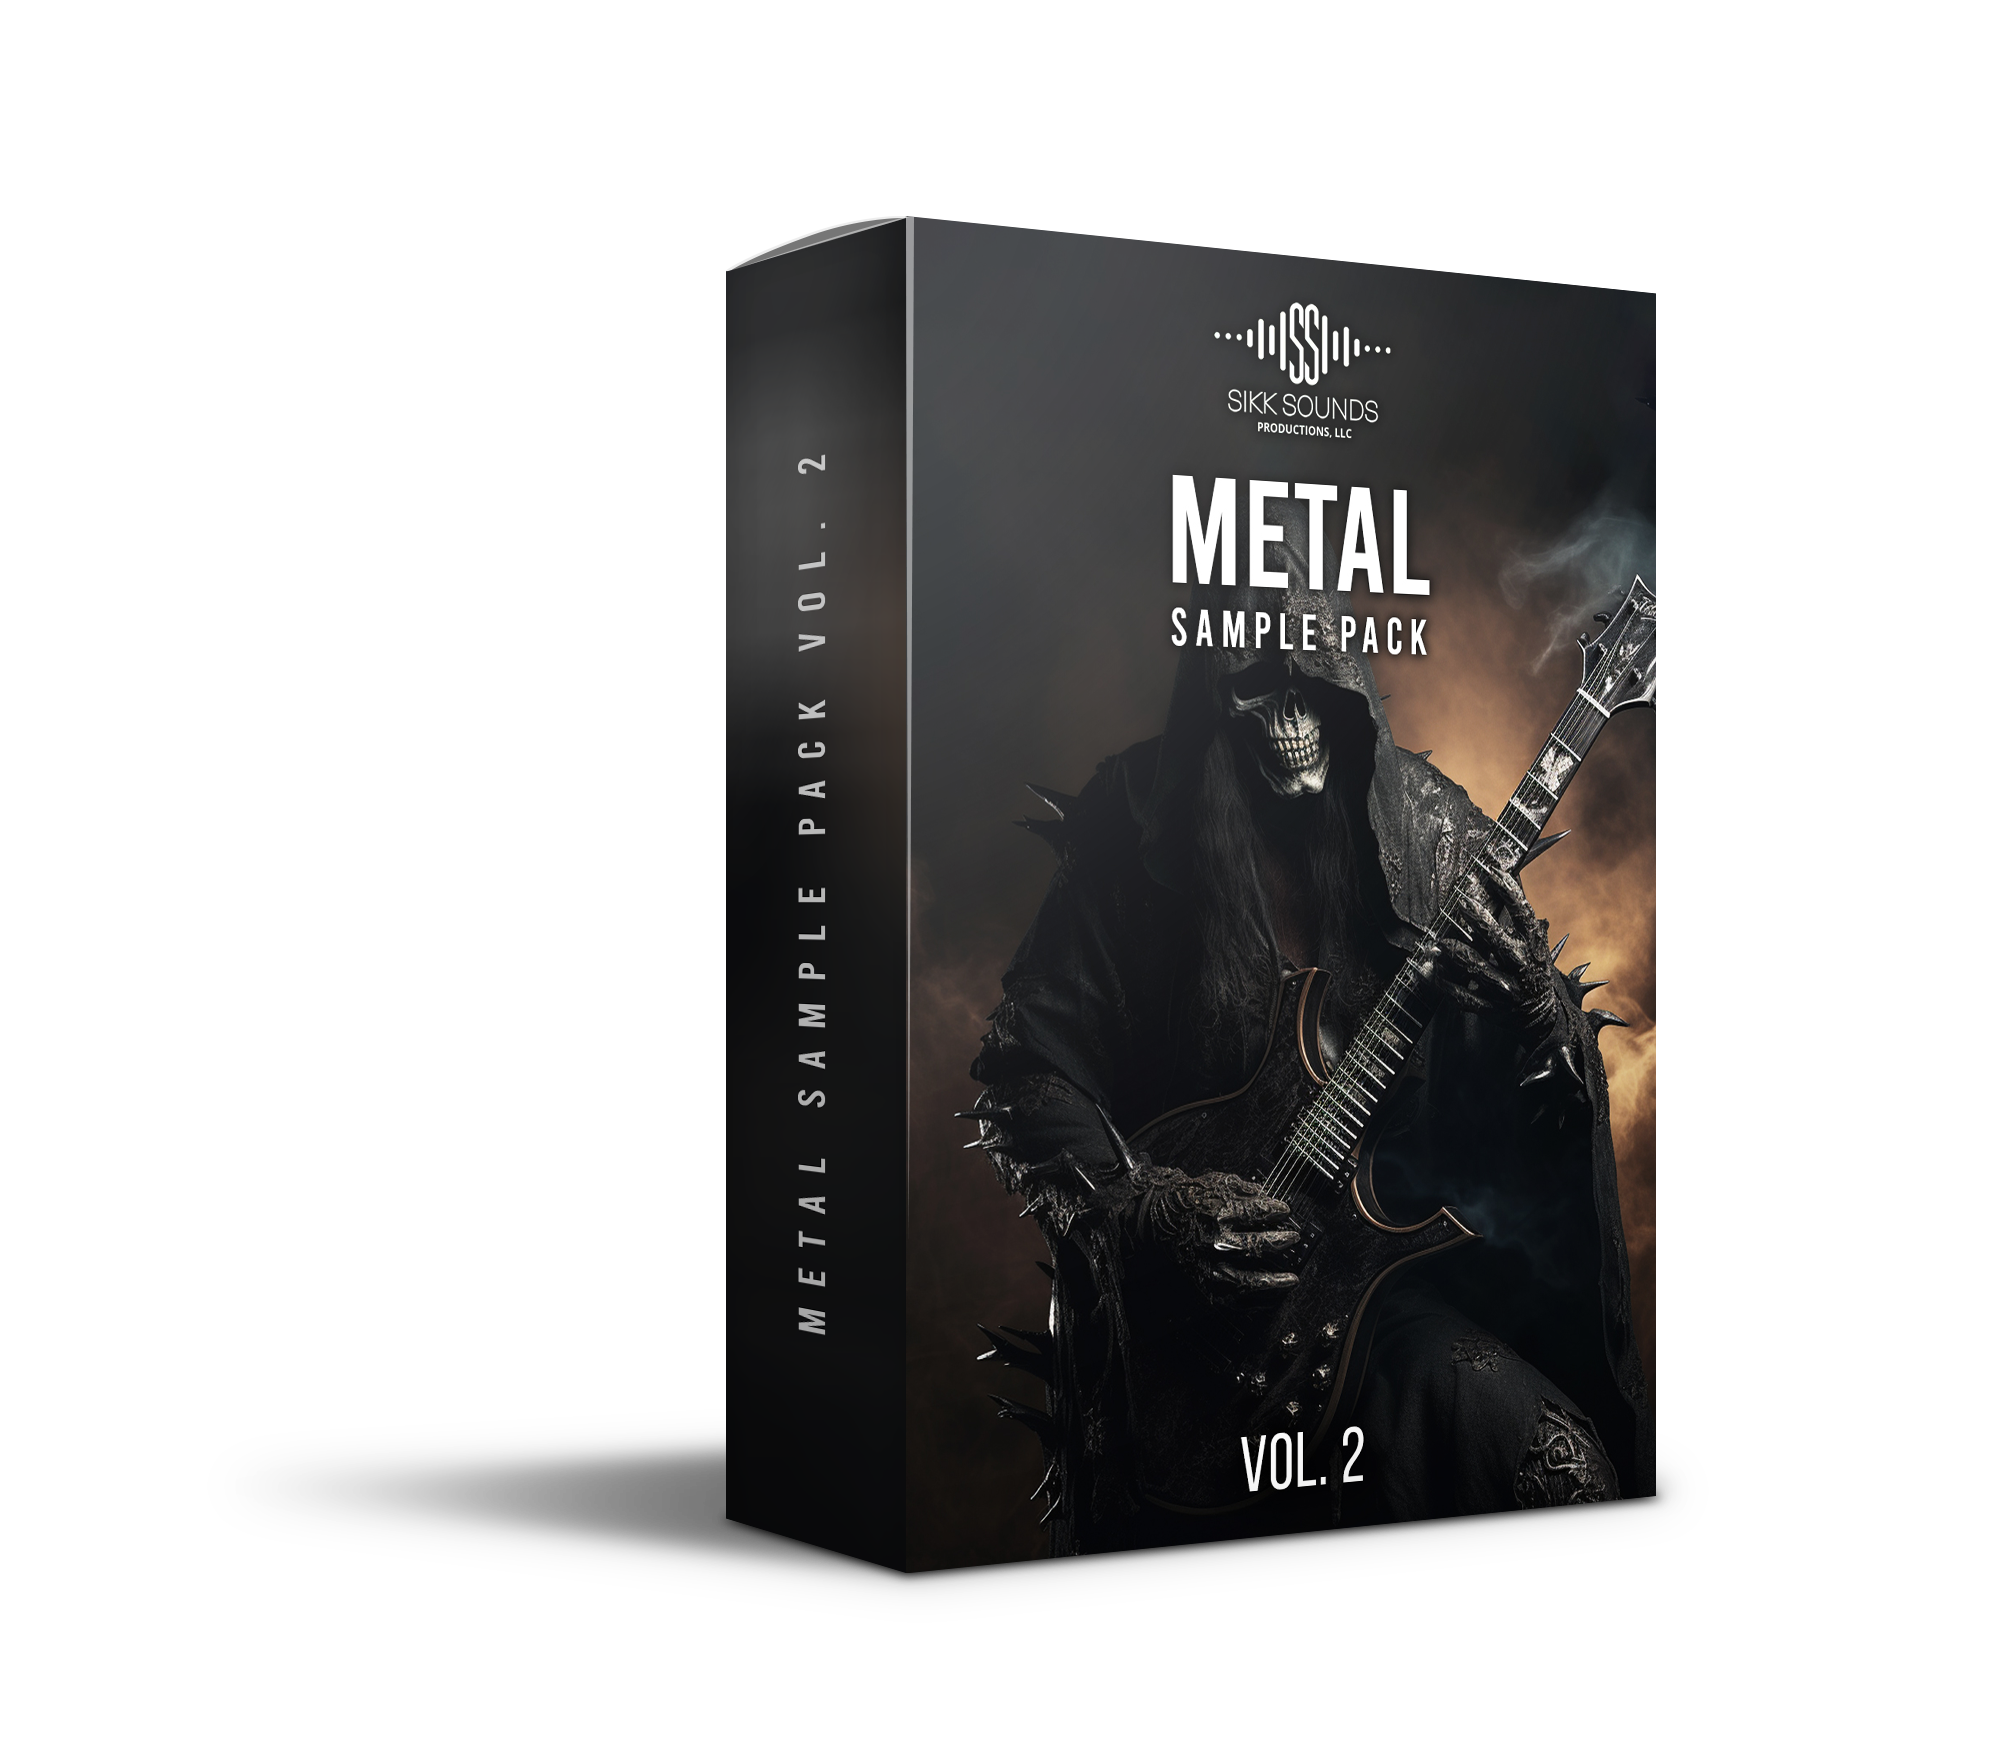 SiKKSounds Metal Sample Pack Vol.2